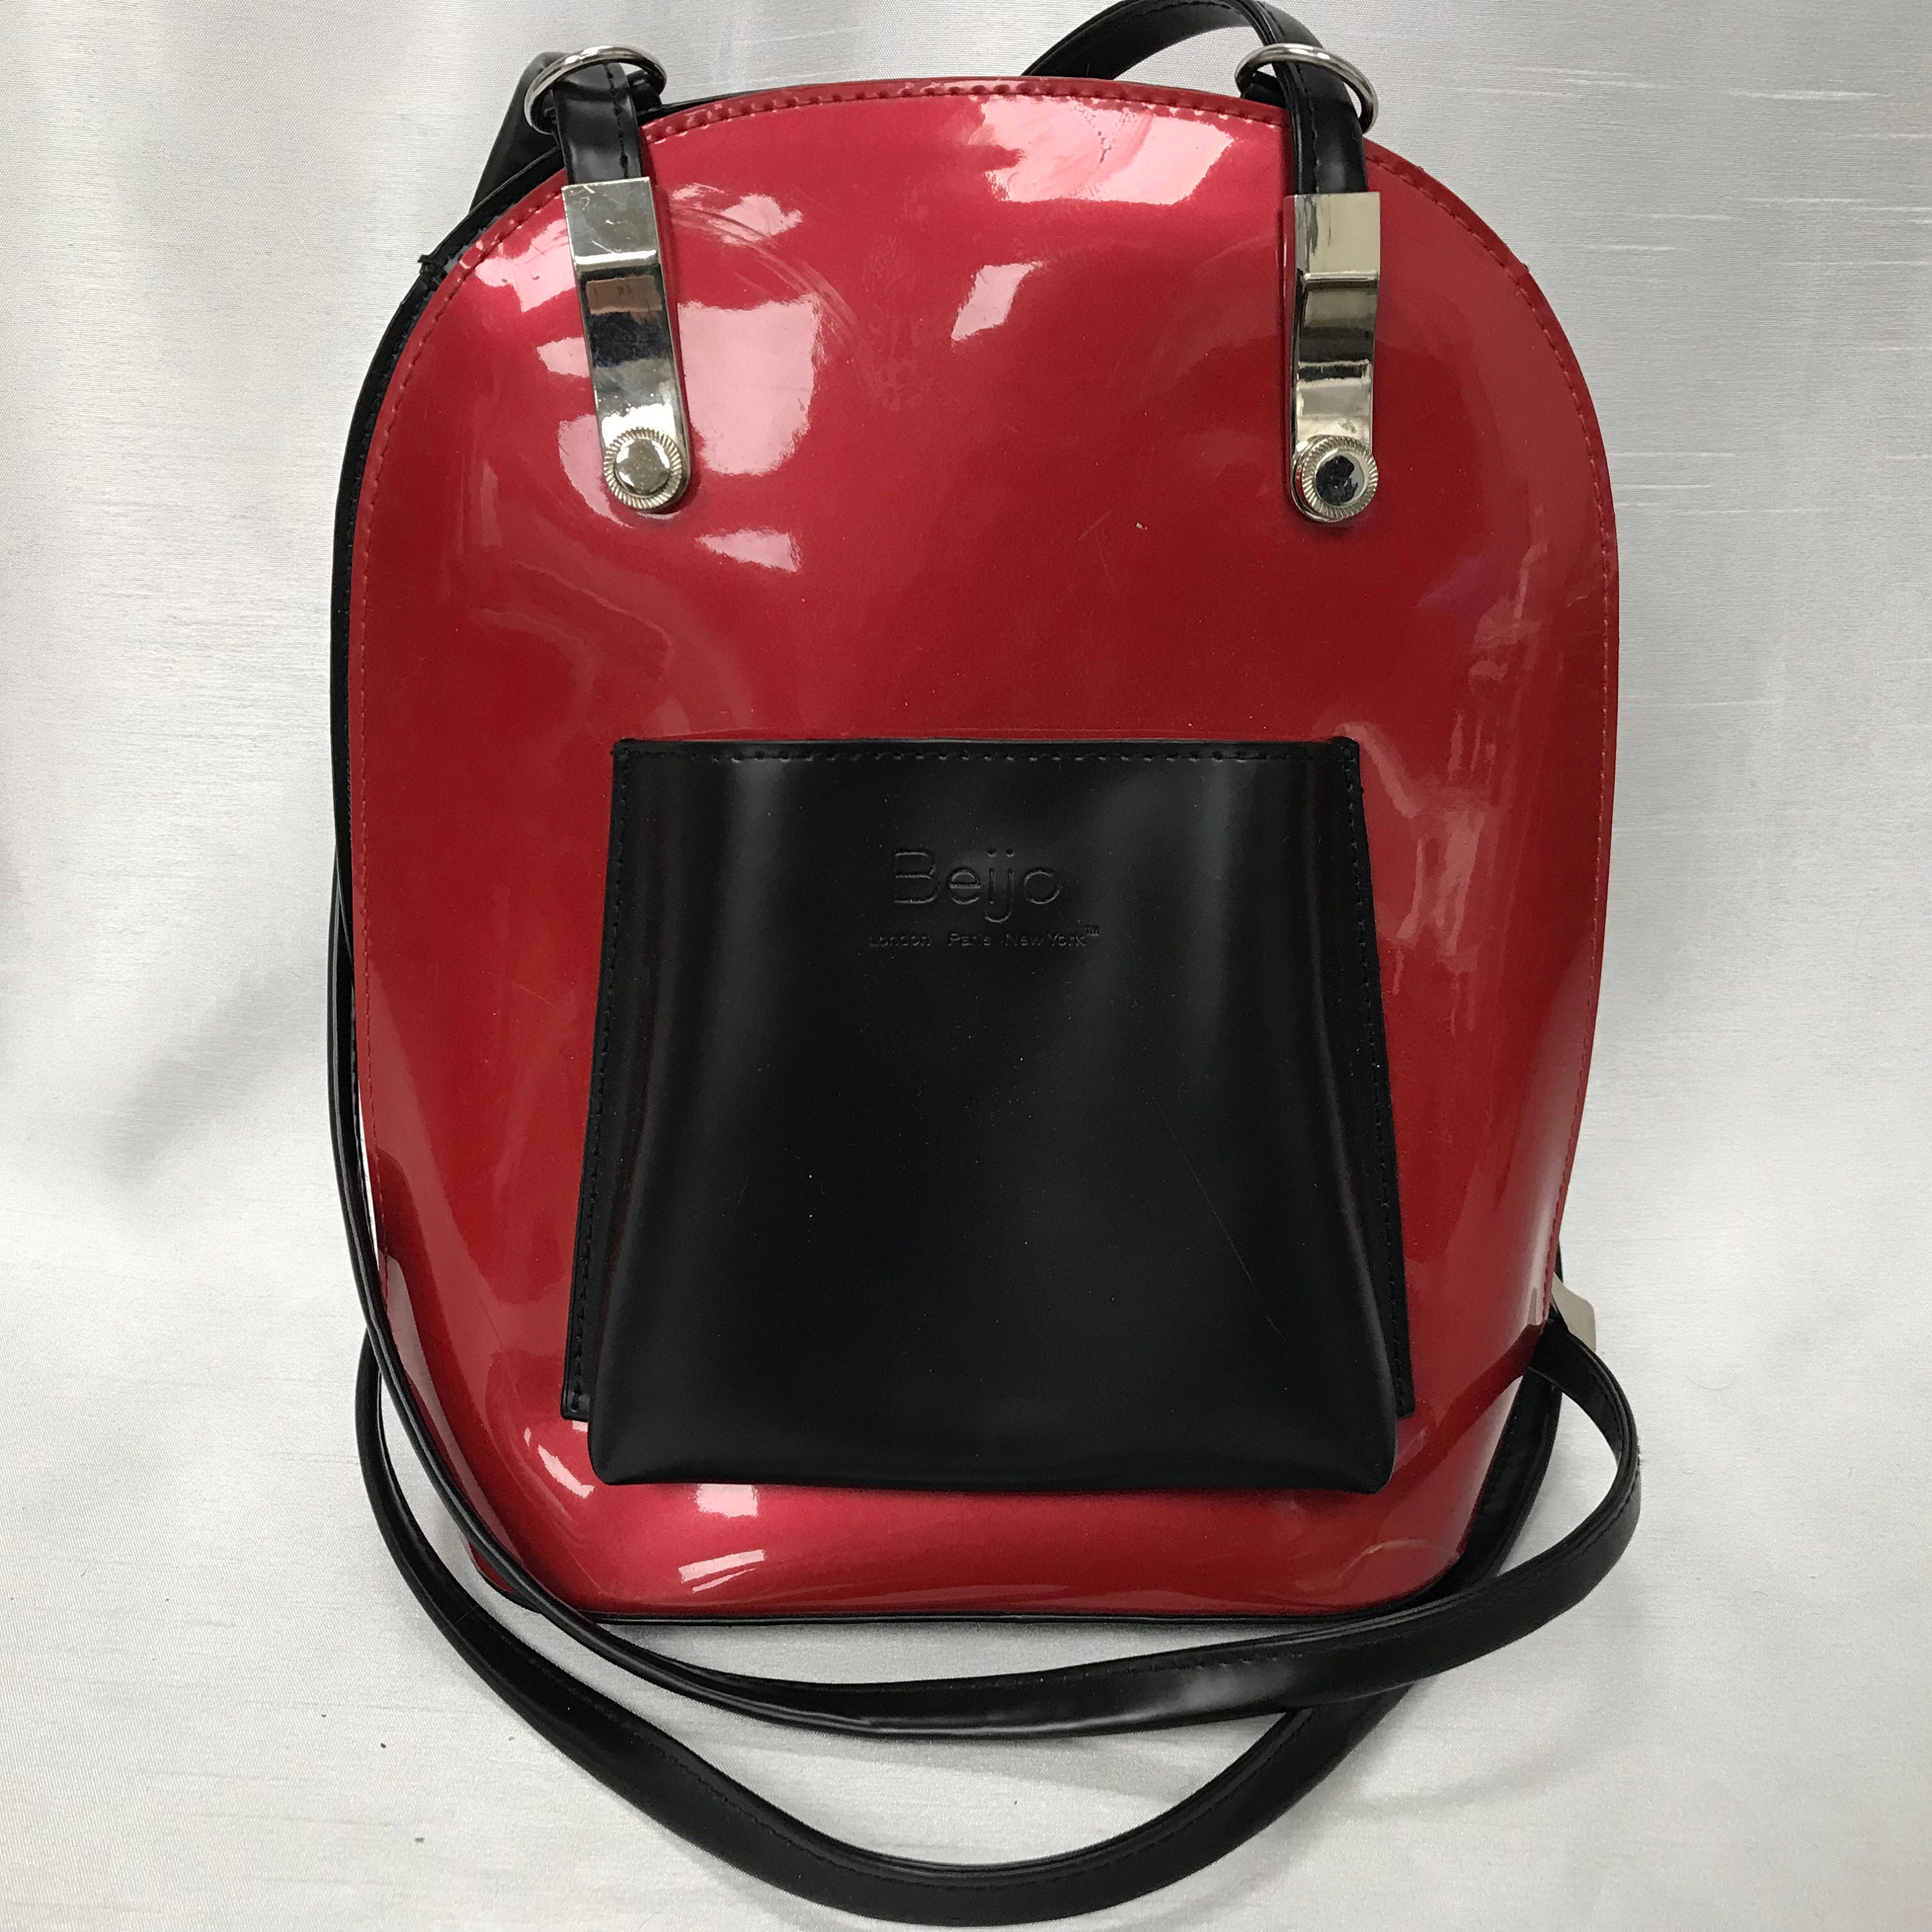 NEW Beijo London Paris New York Mini Patent Leather Handbag Clutch Cross  Body